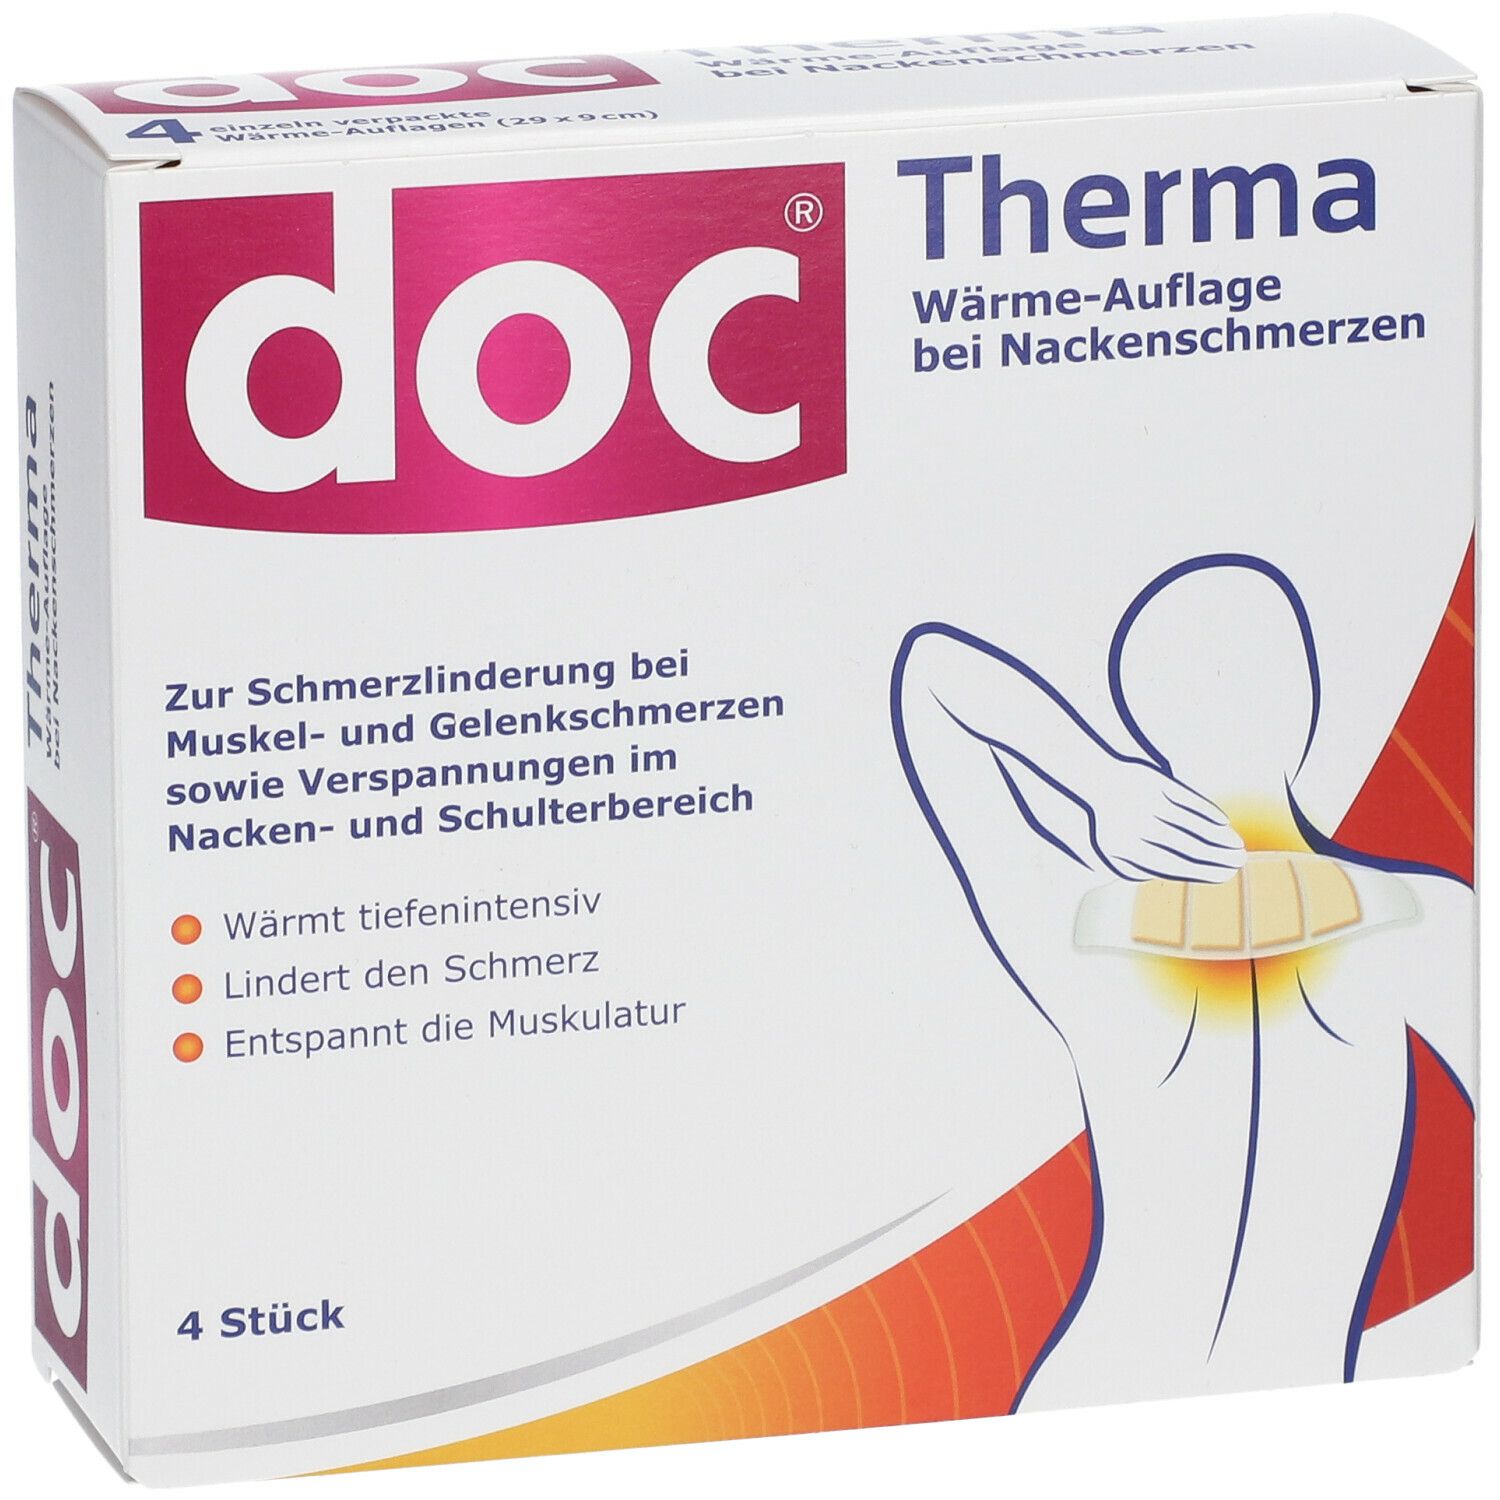 doc® Therma bei Nackenschmerzen